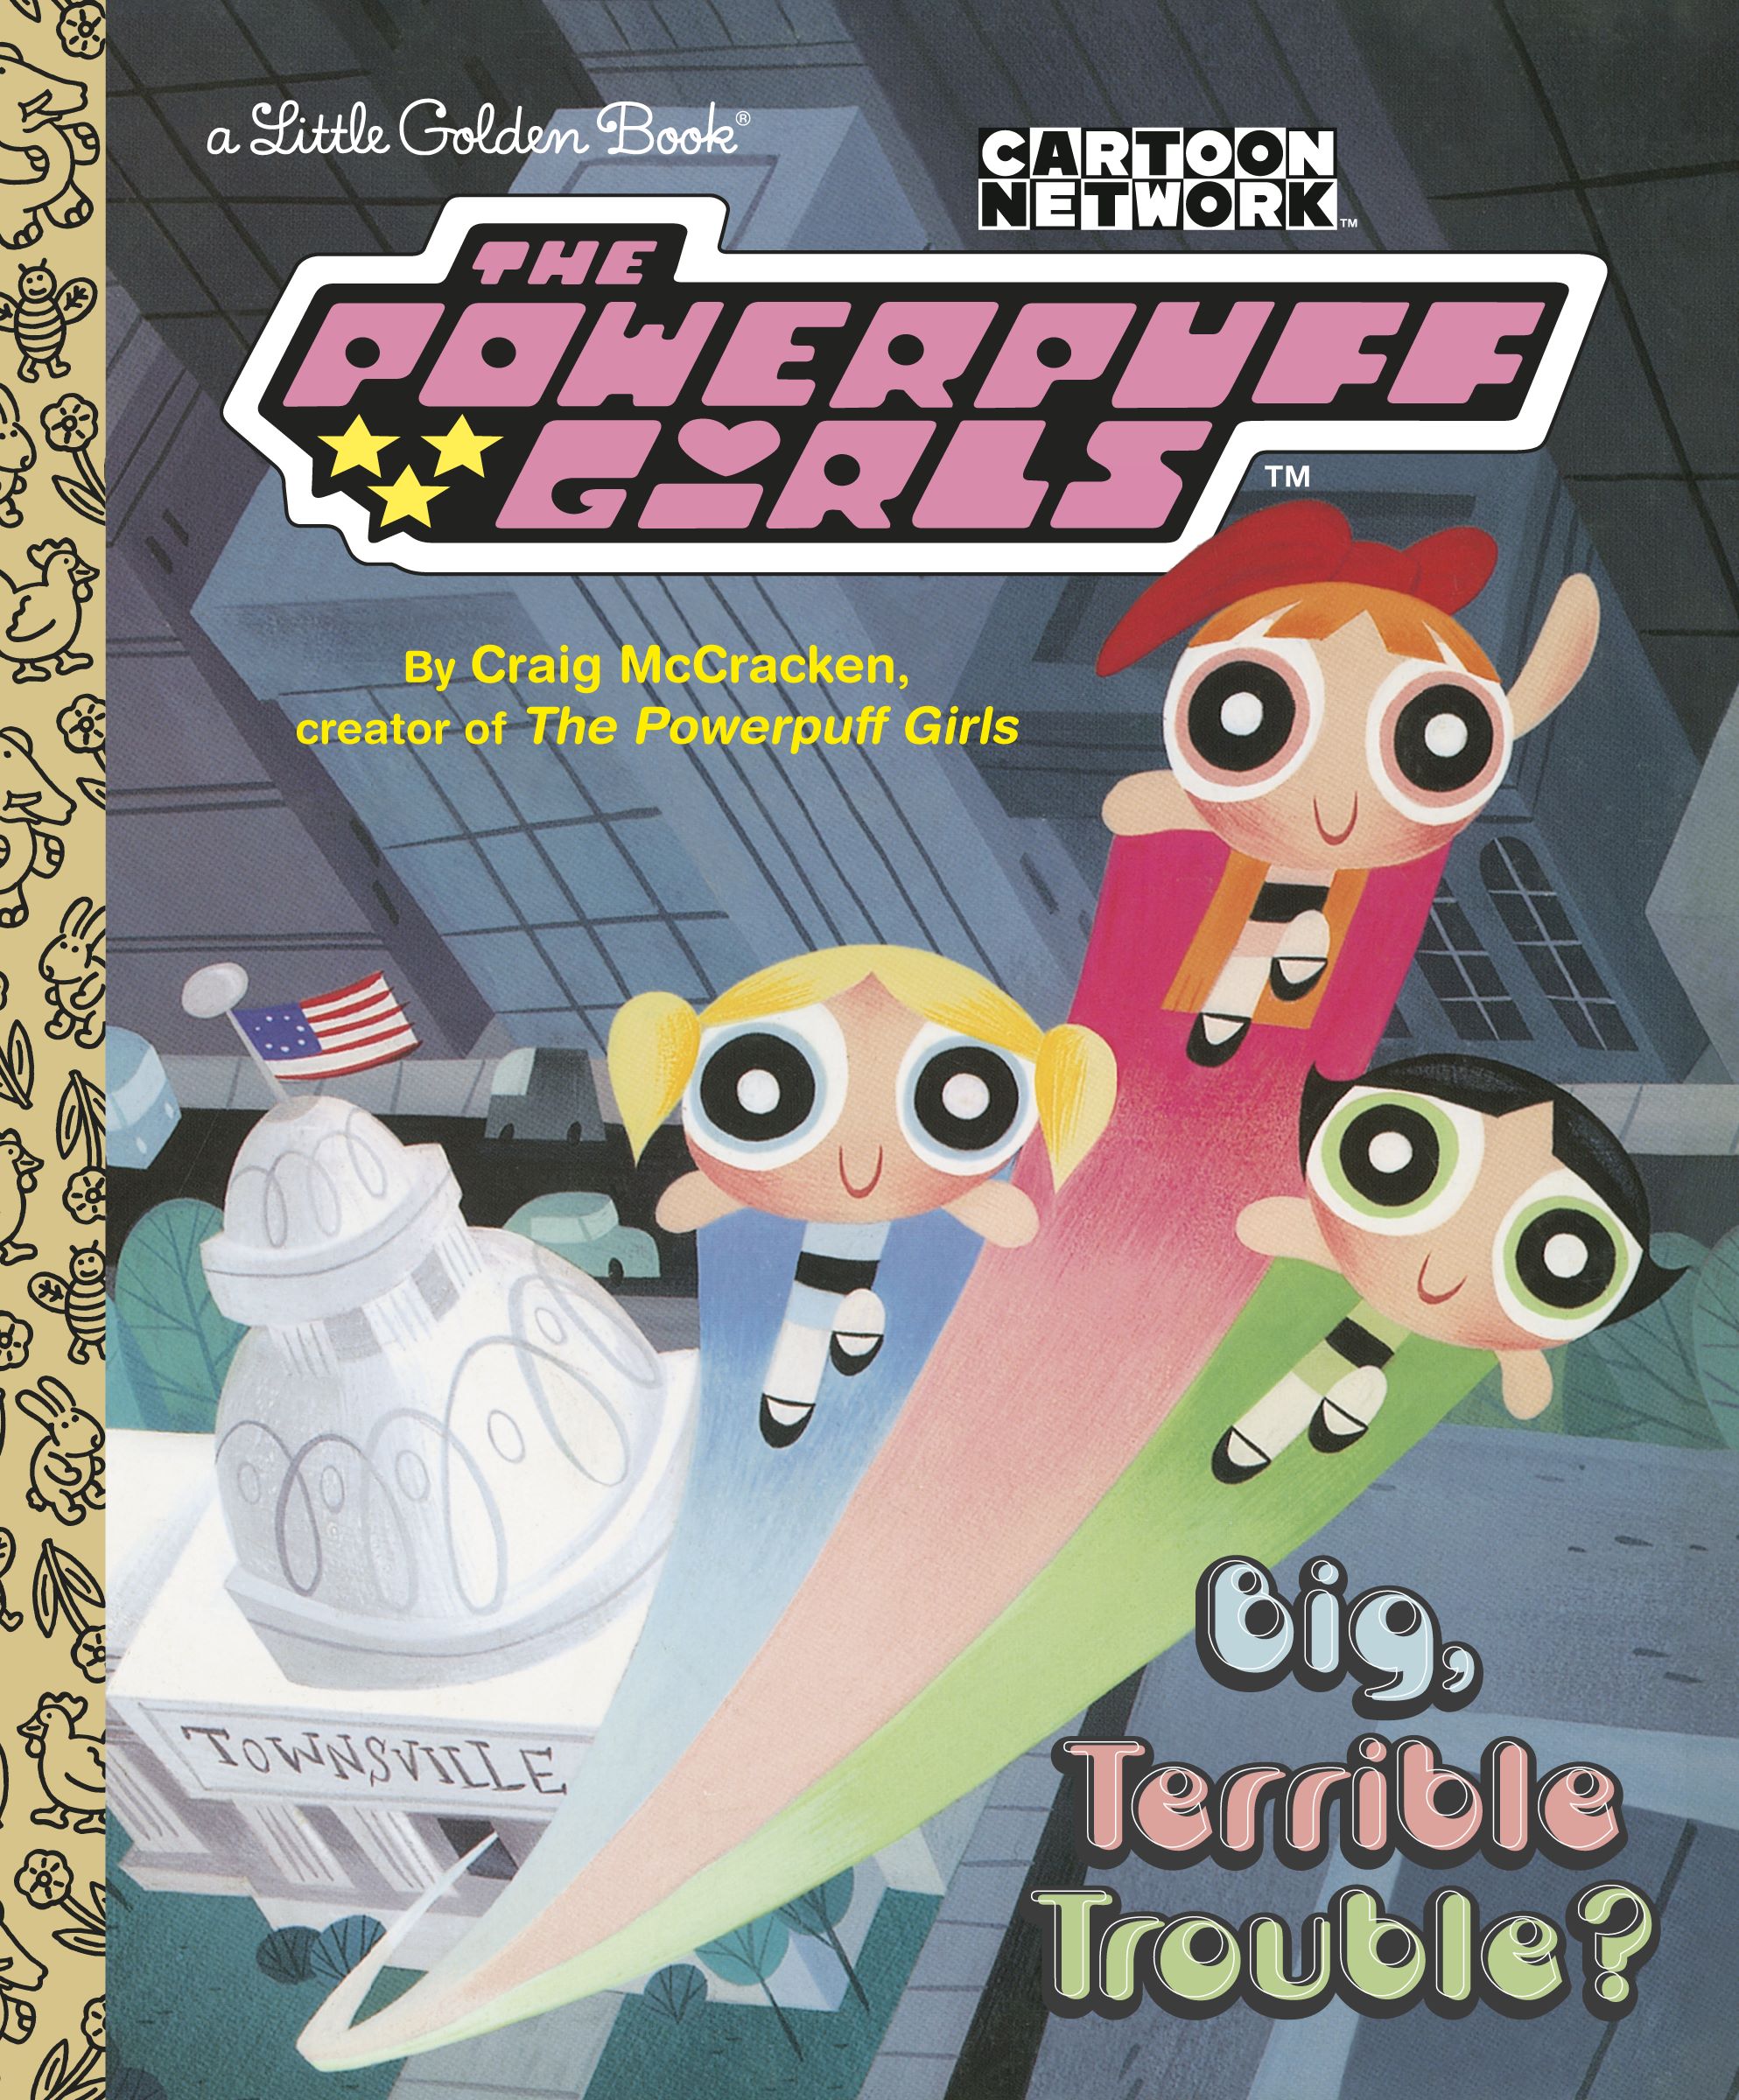 Little Golden Book The Powerpuff Girls Big, Terrible Trouble?